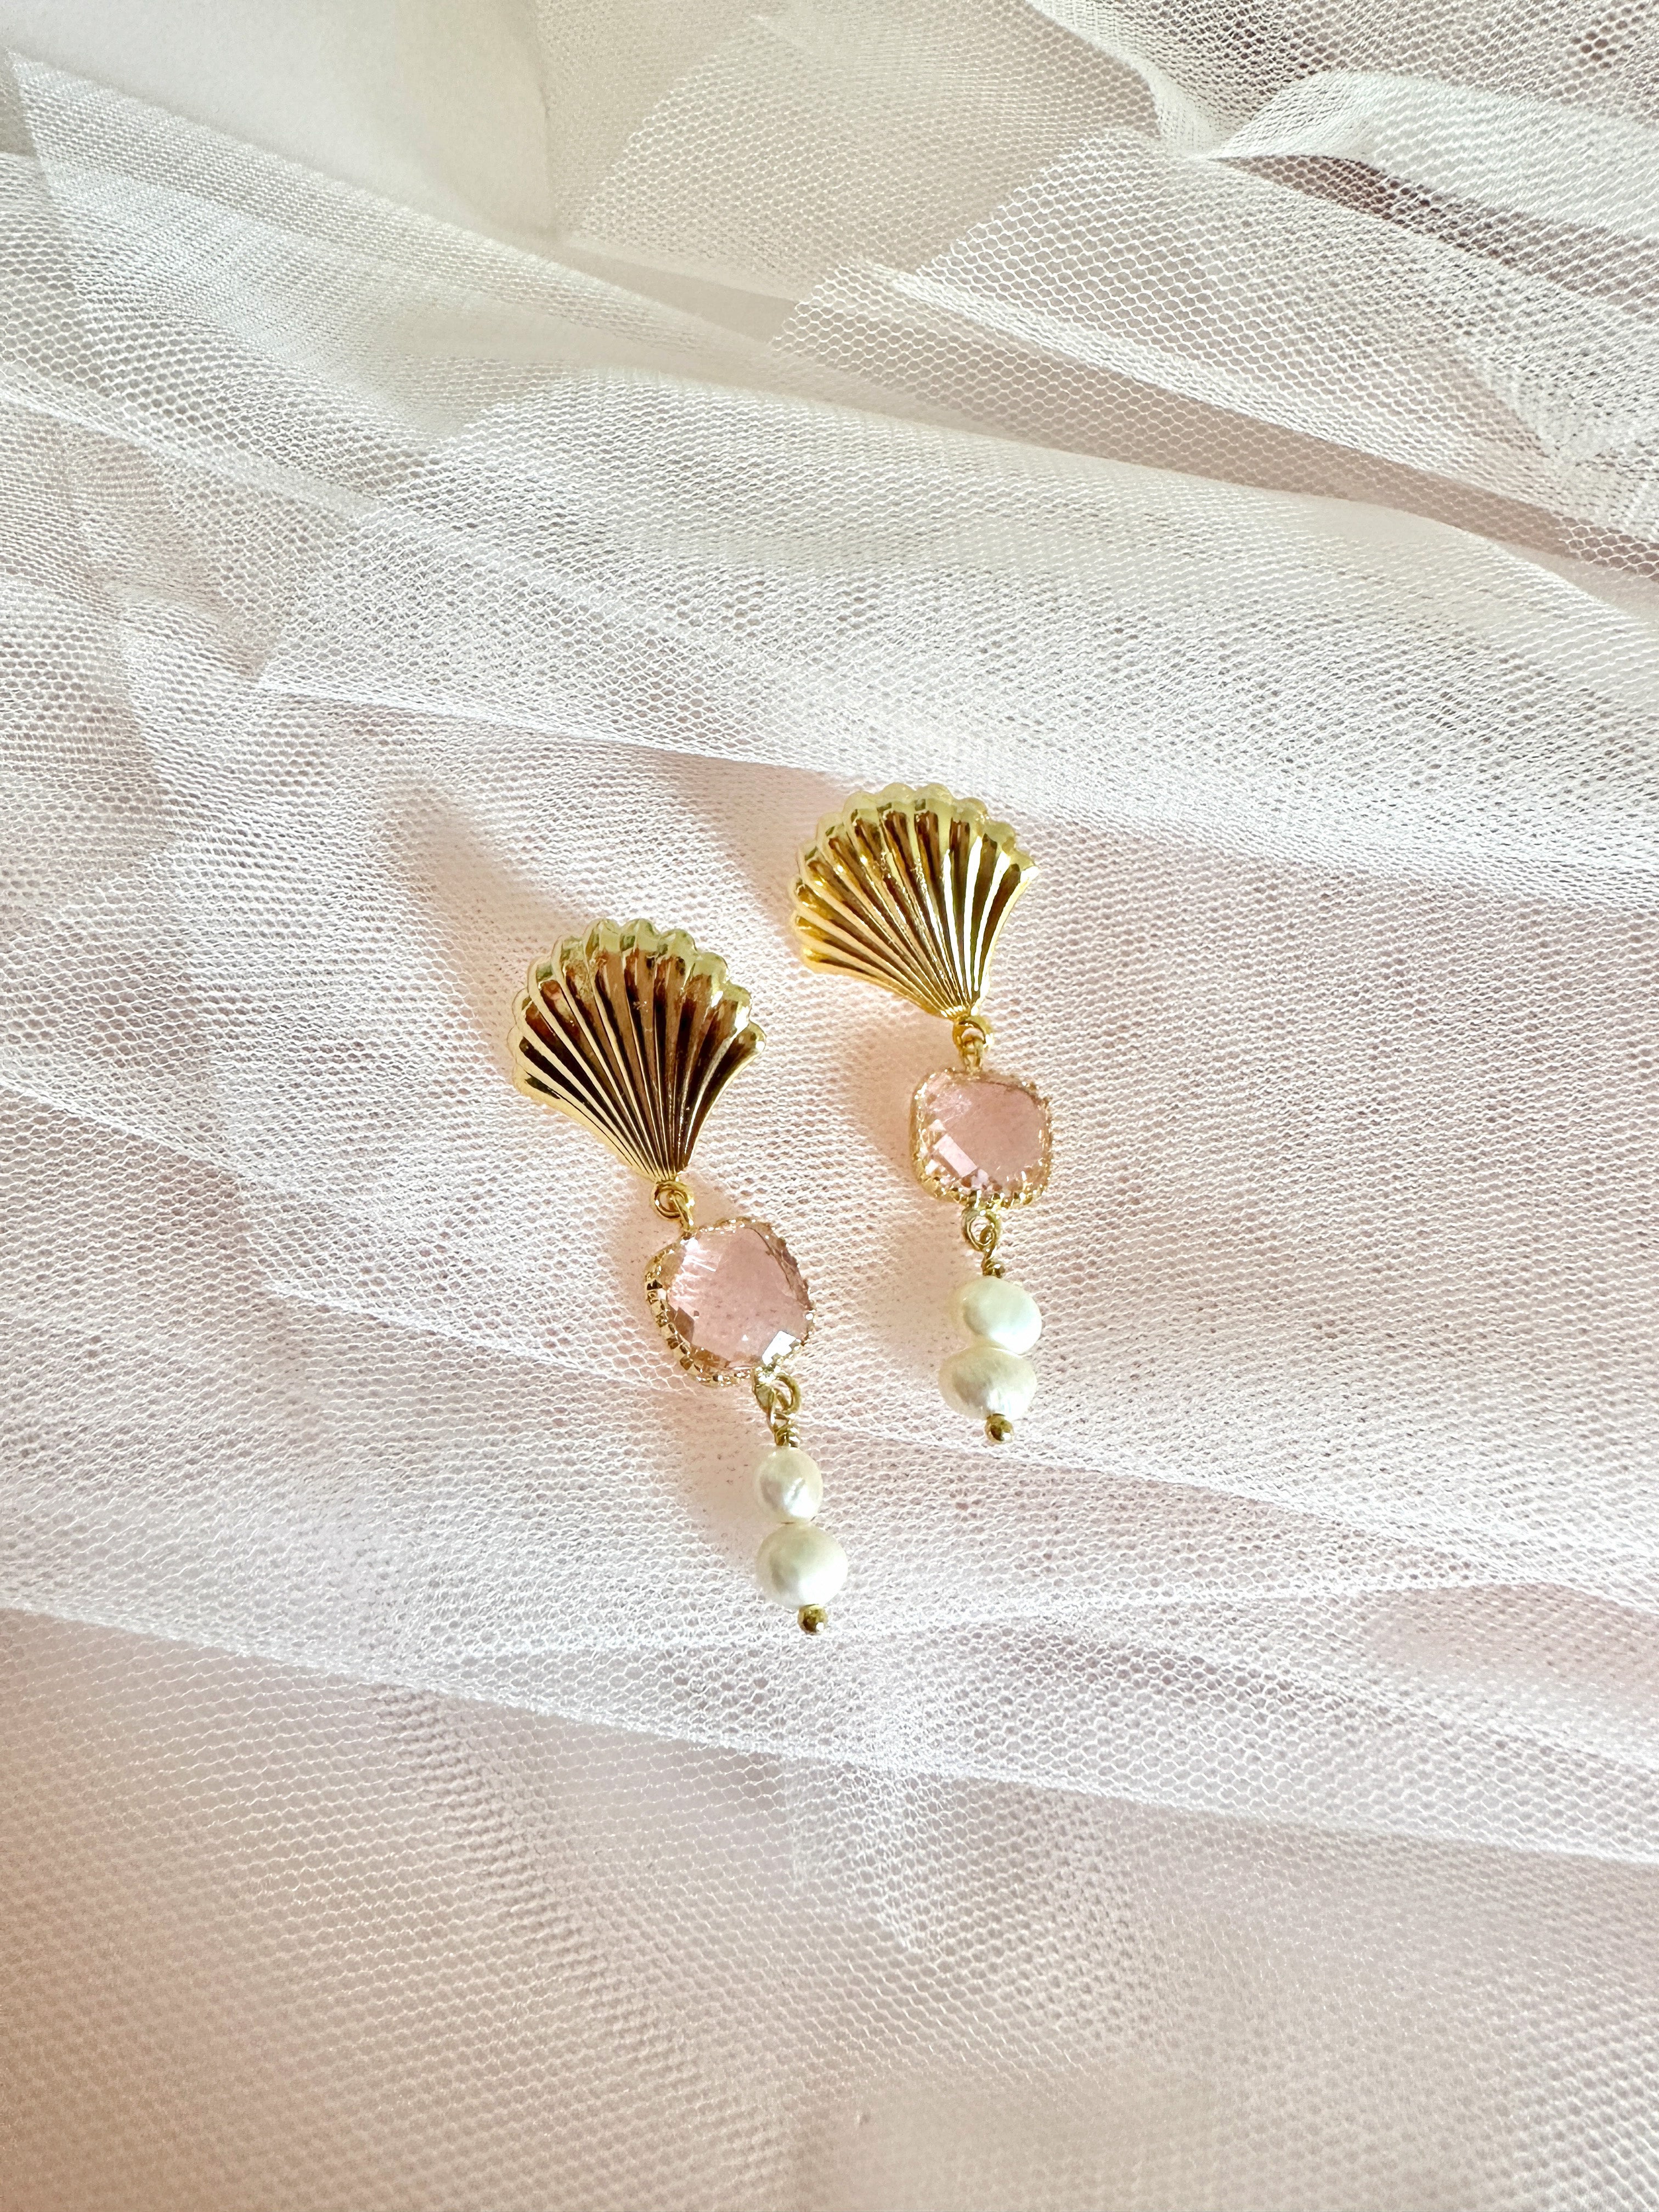 The “Forever Mermaid” earrings